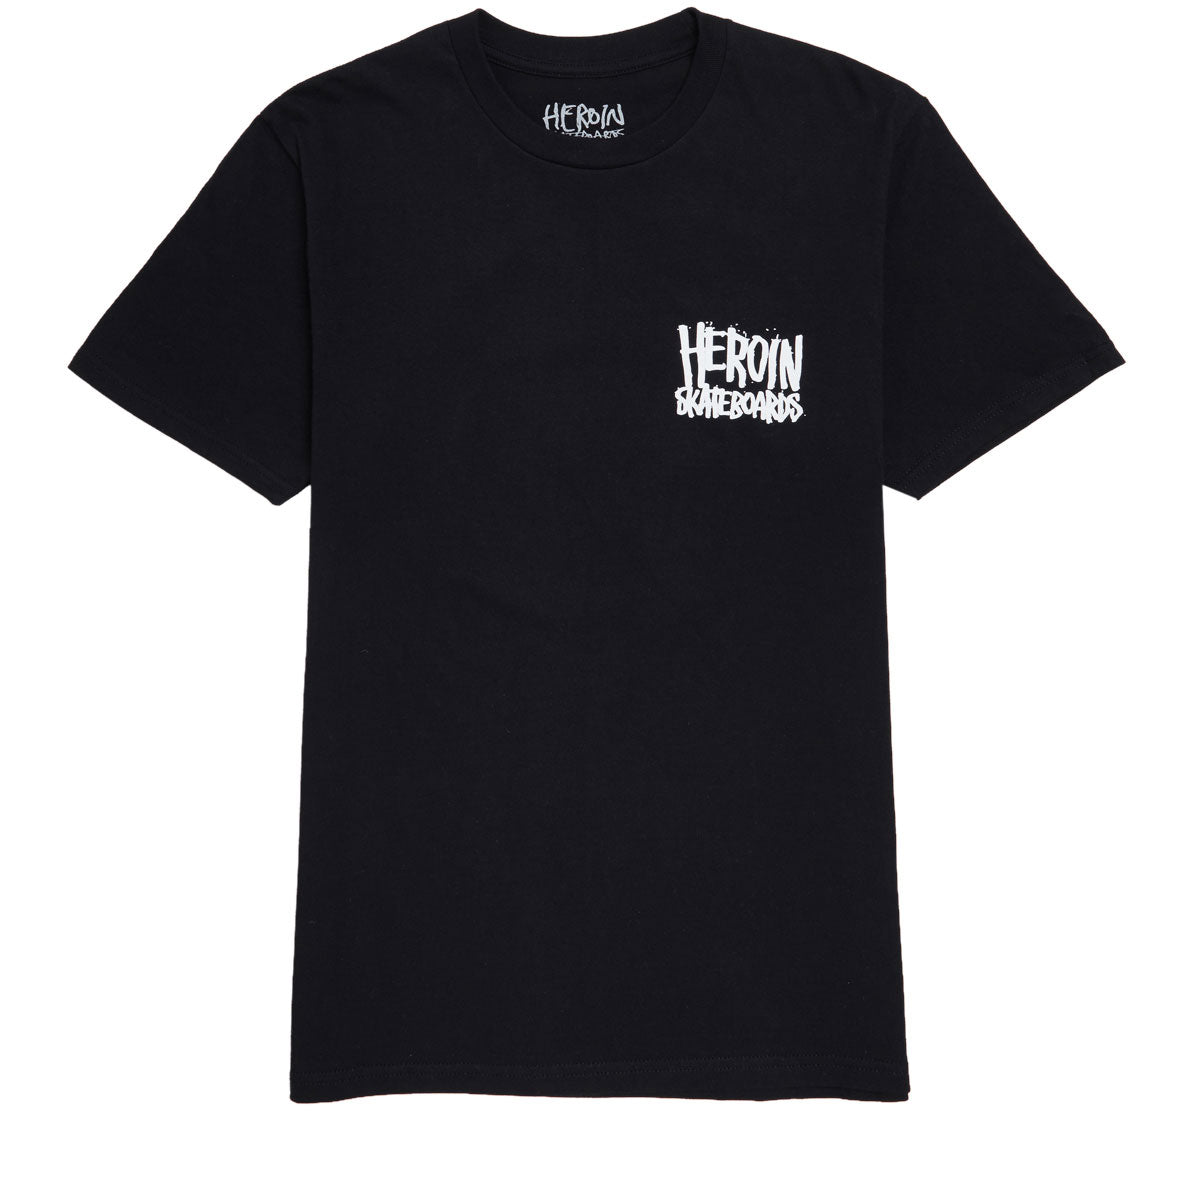 Heroin Eggzilla T-Shirt - Black image 2